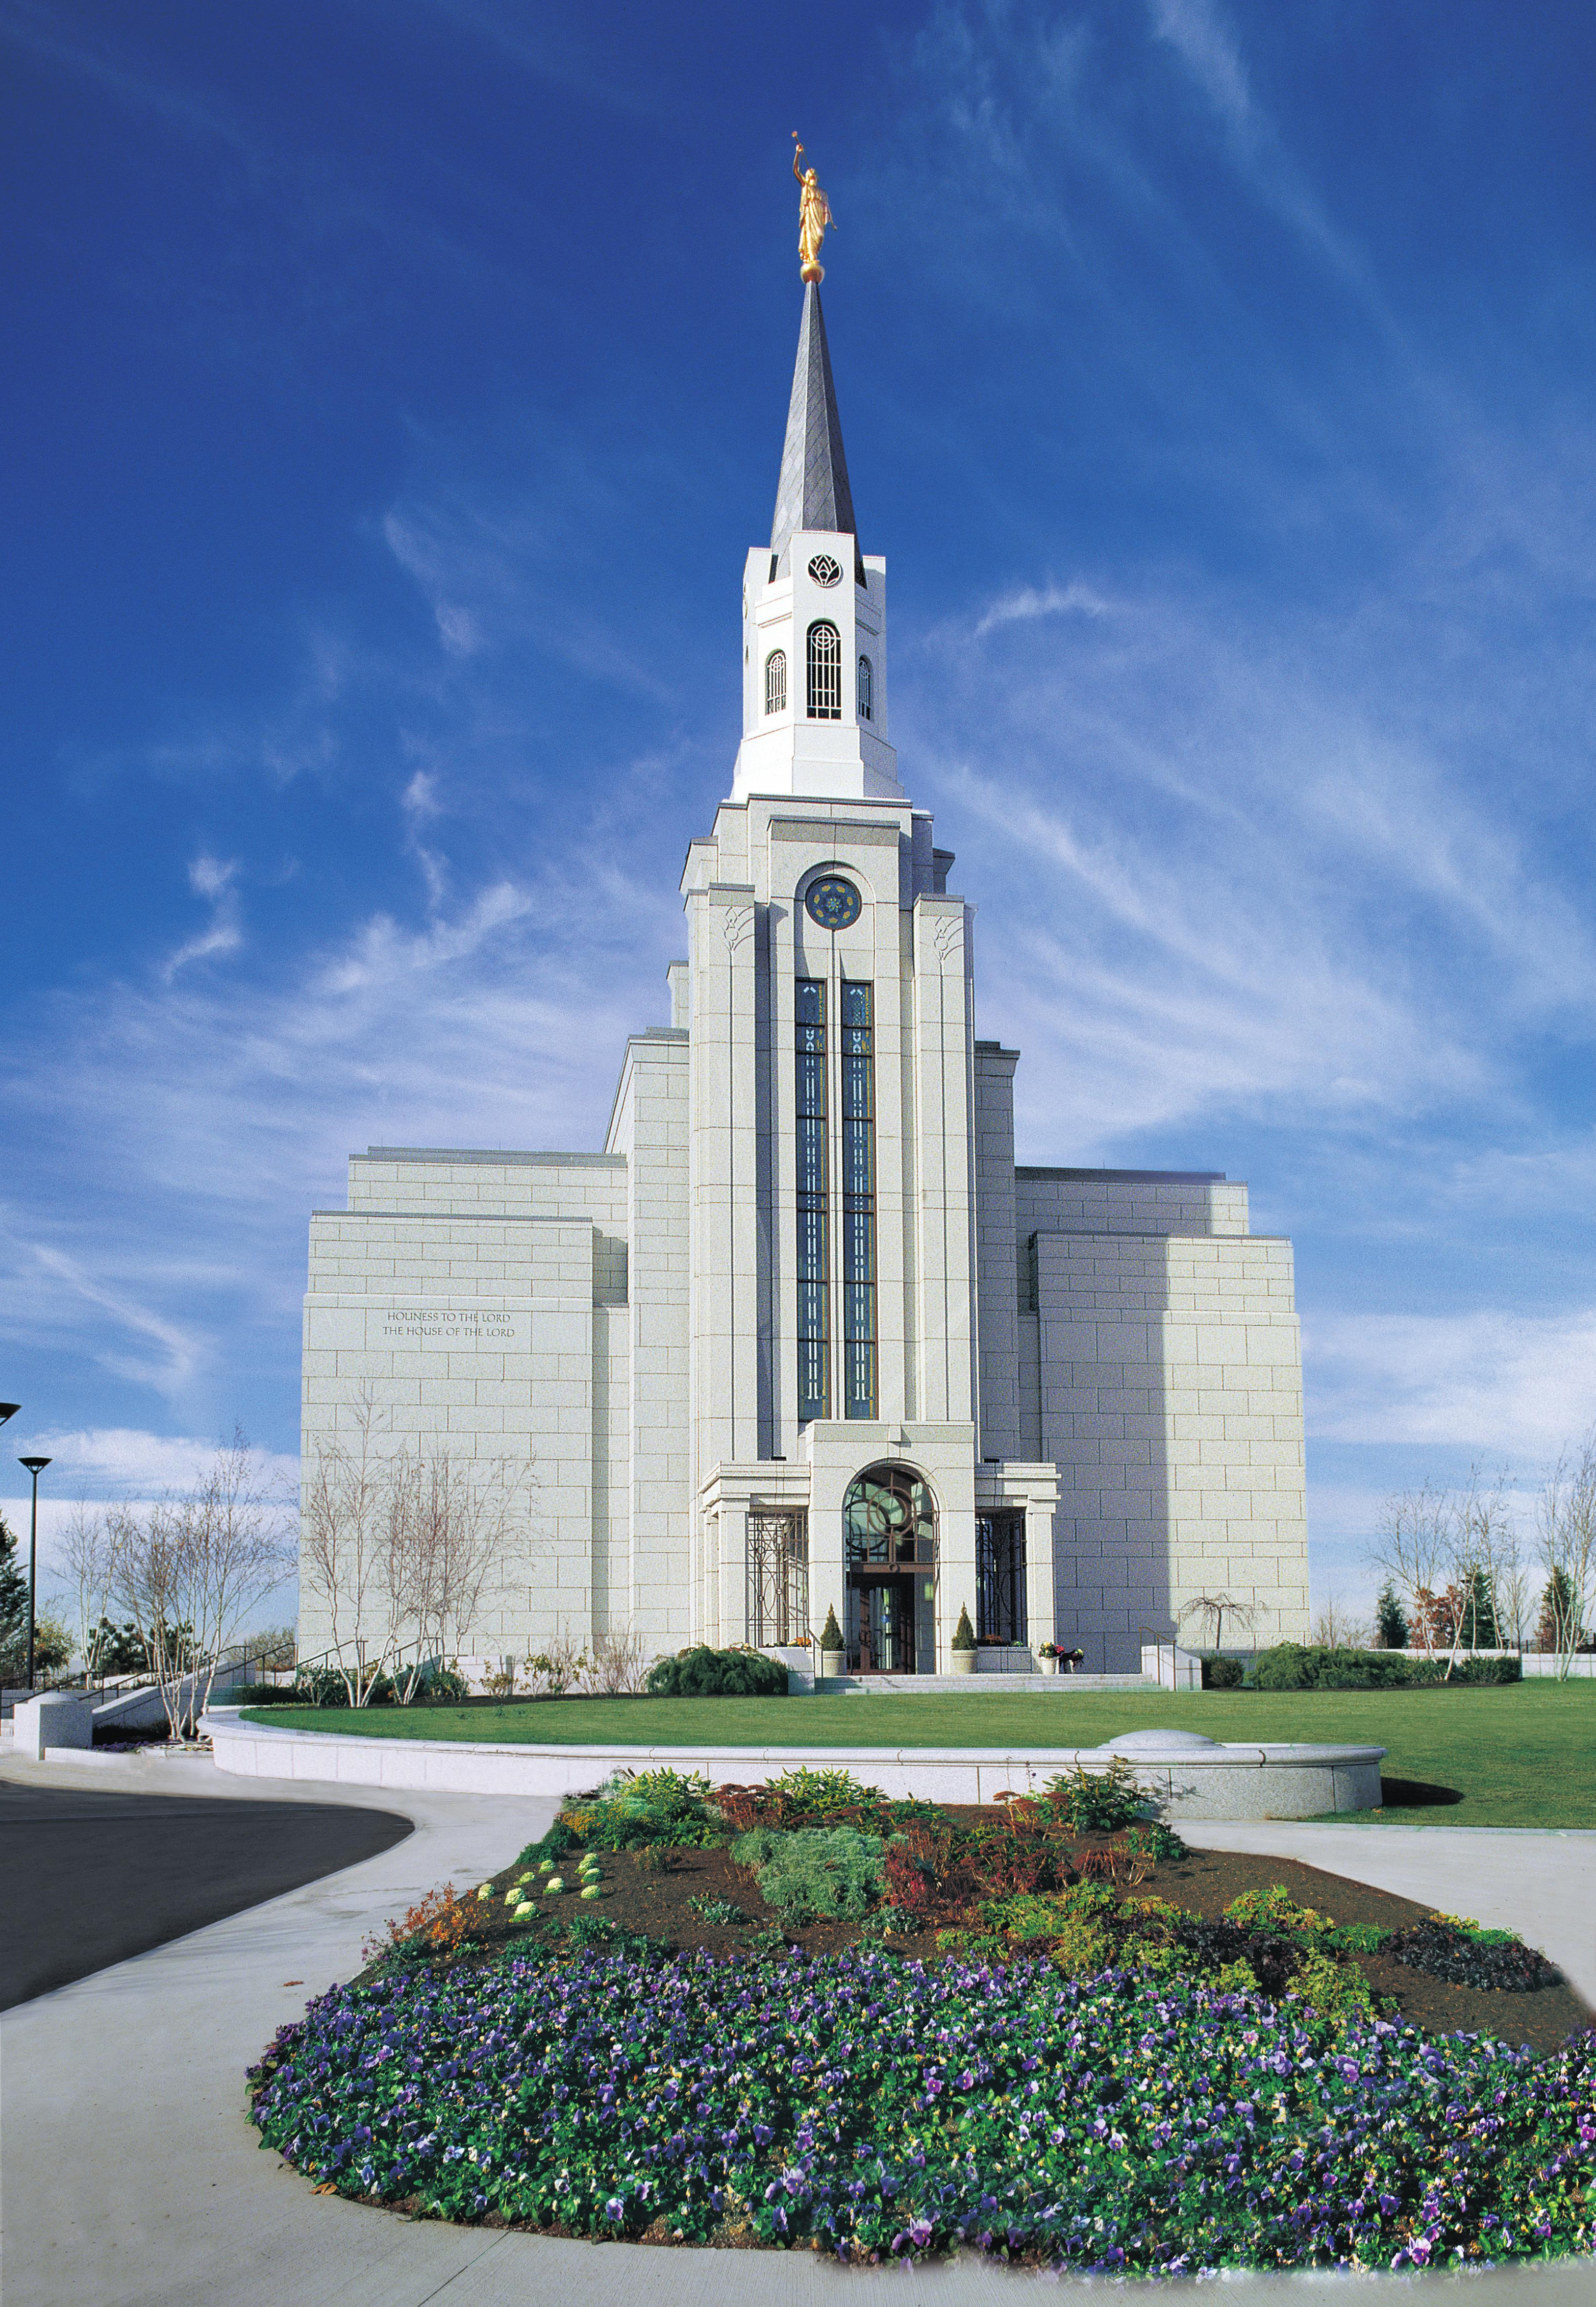 The Church of Jesus Christ of Latter-day Saints SE 73rd Ave Portland Oregon | 3025 SE 73rd Ave, Portland, OR, 97206 | +1 (503) 774-6512